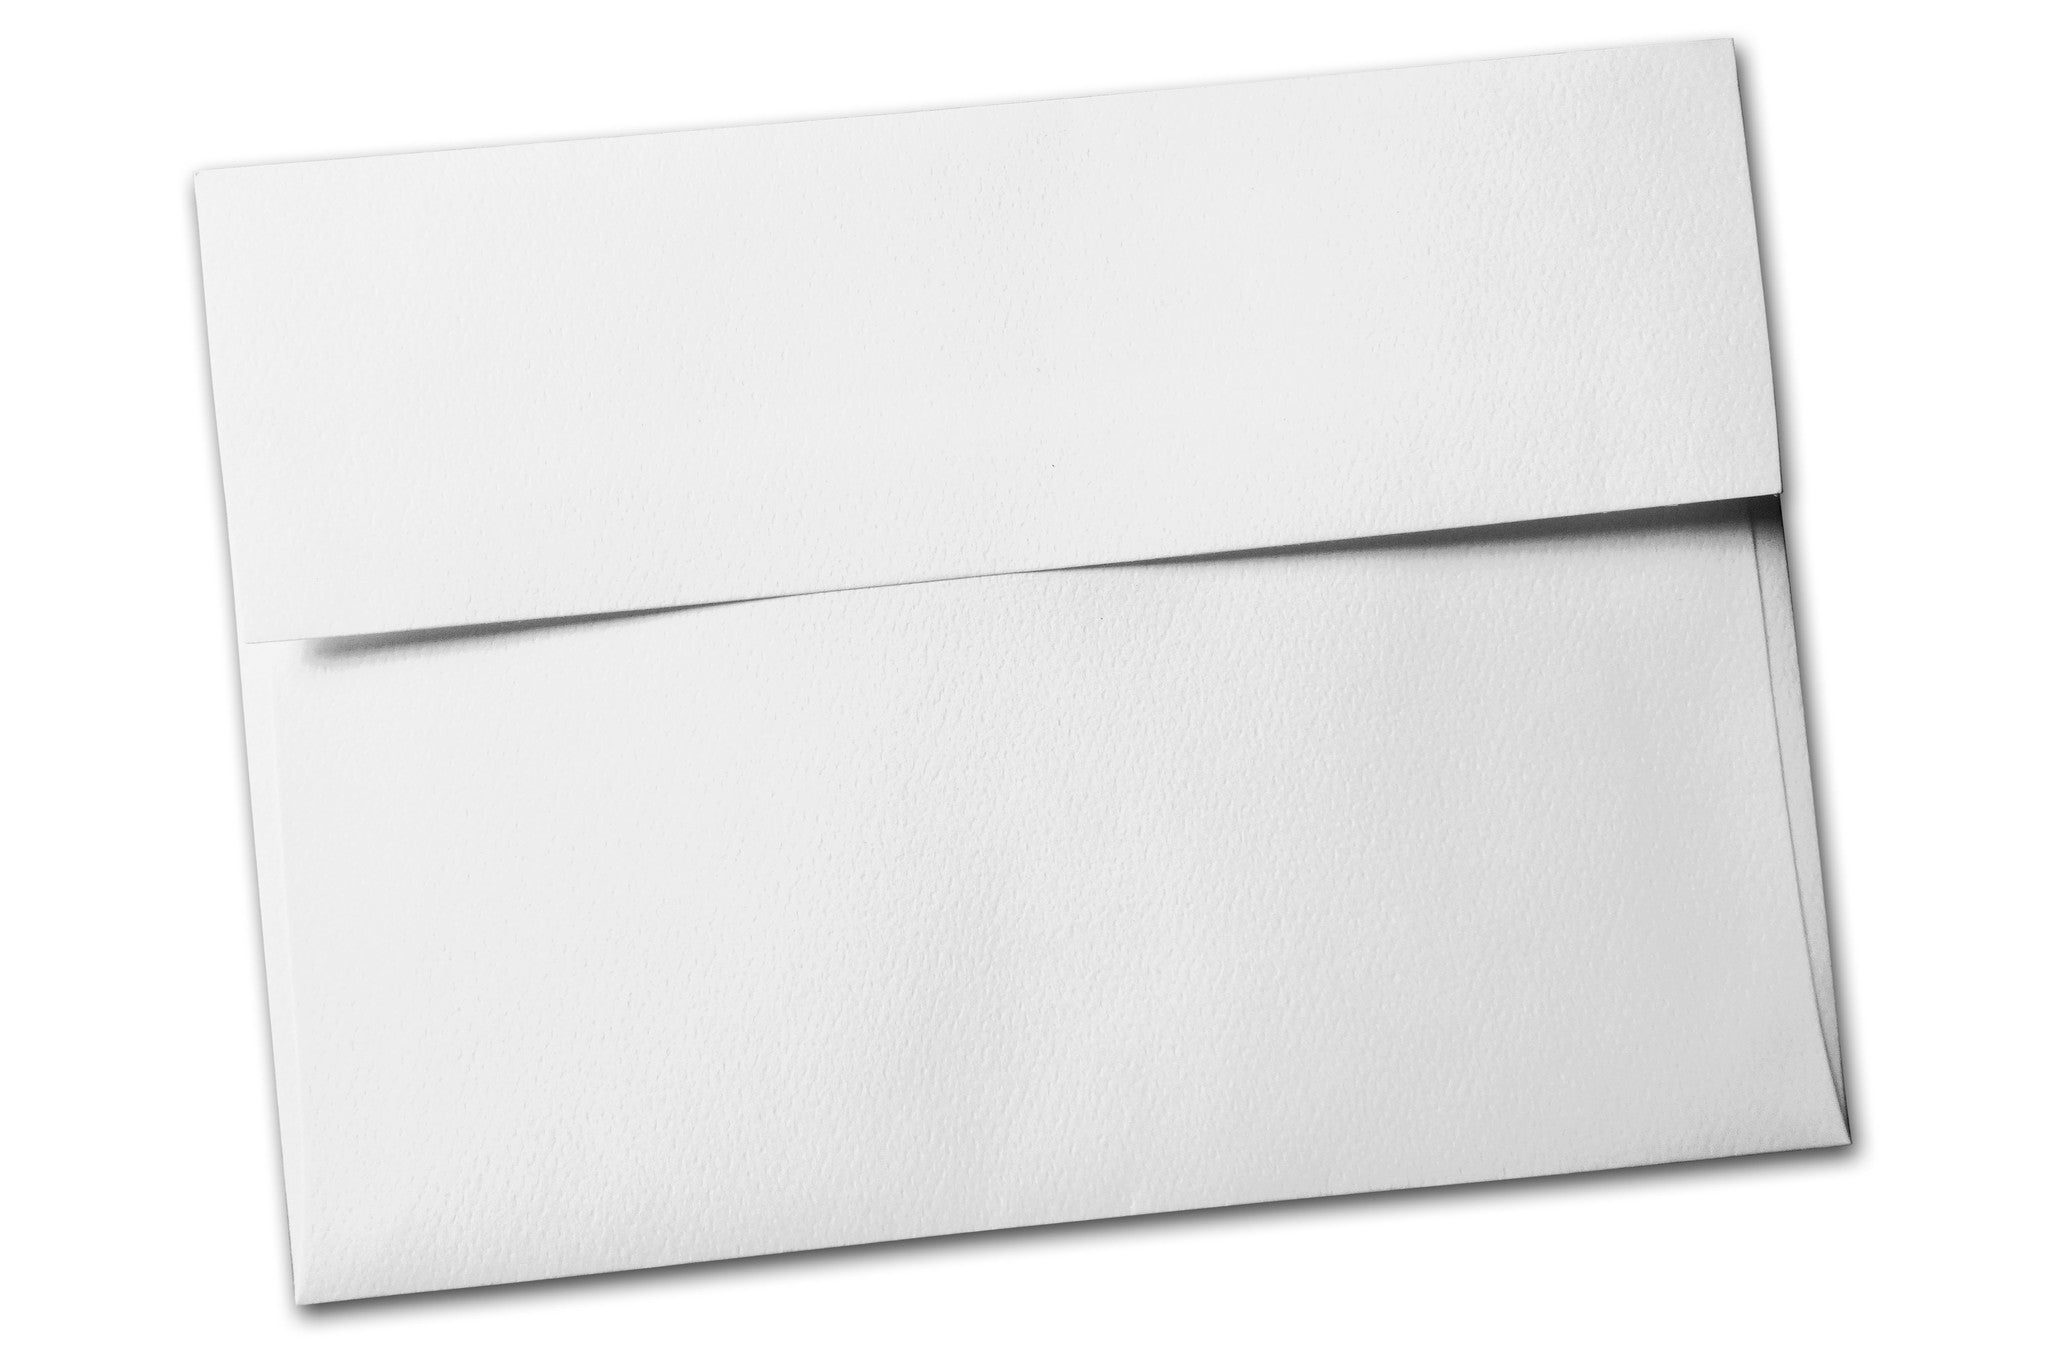 Royal Sundance FELT A7 Envelopes for 5x7 DIY Invitations and cards